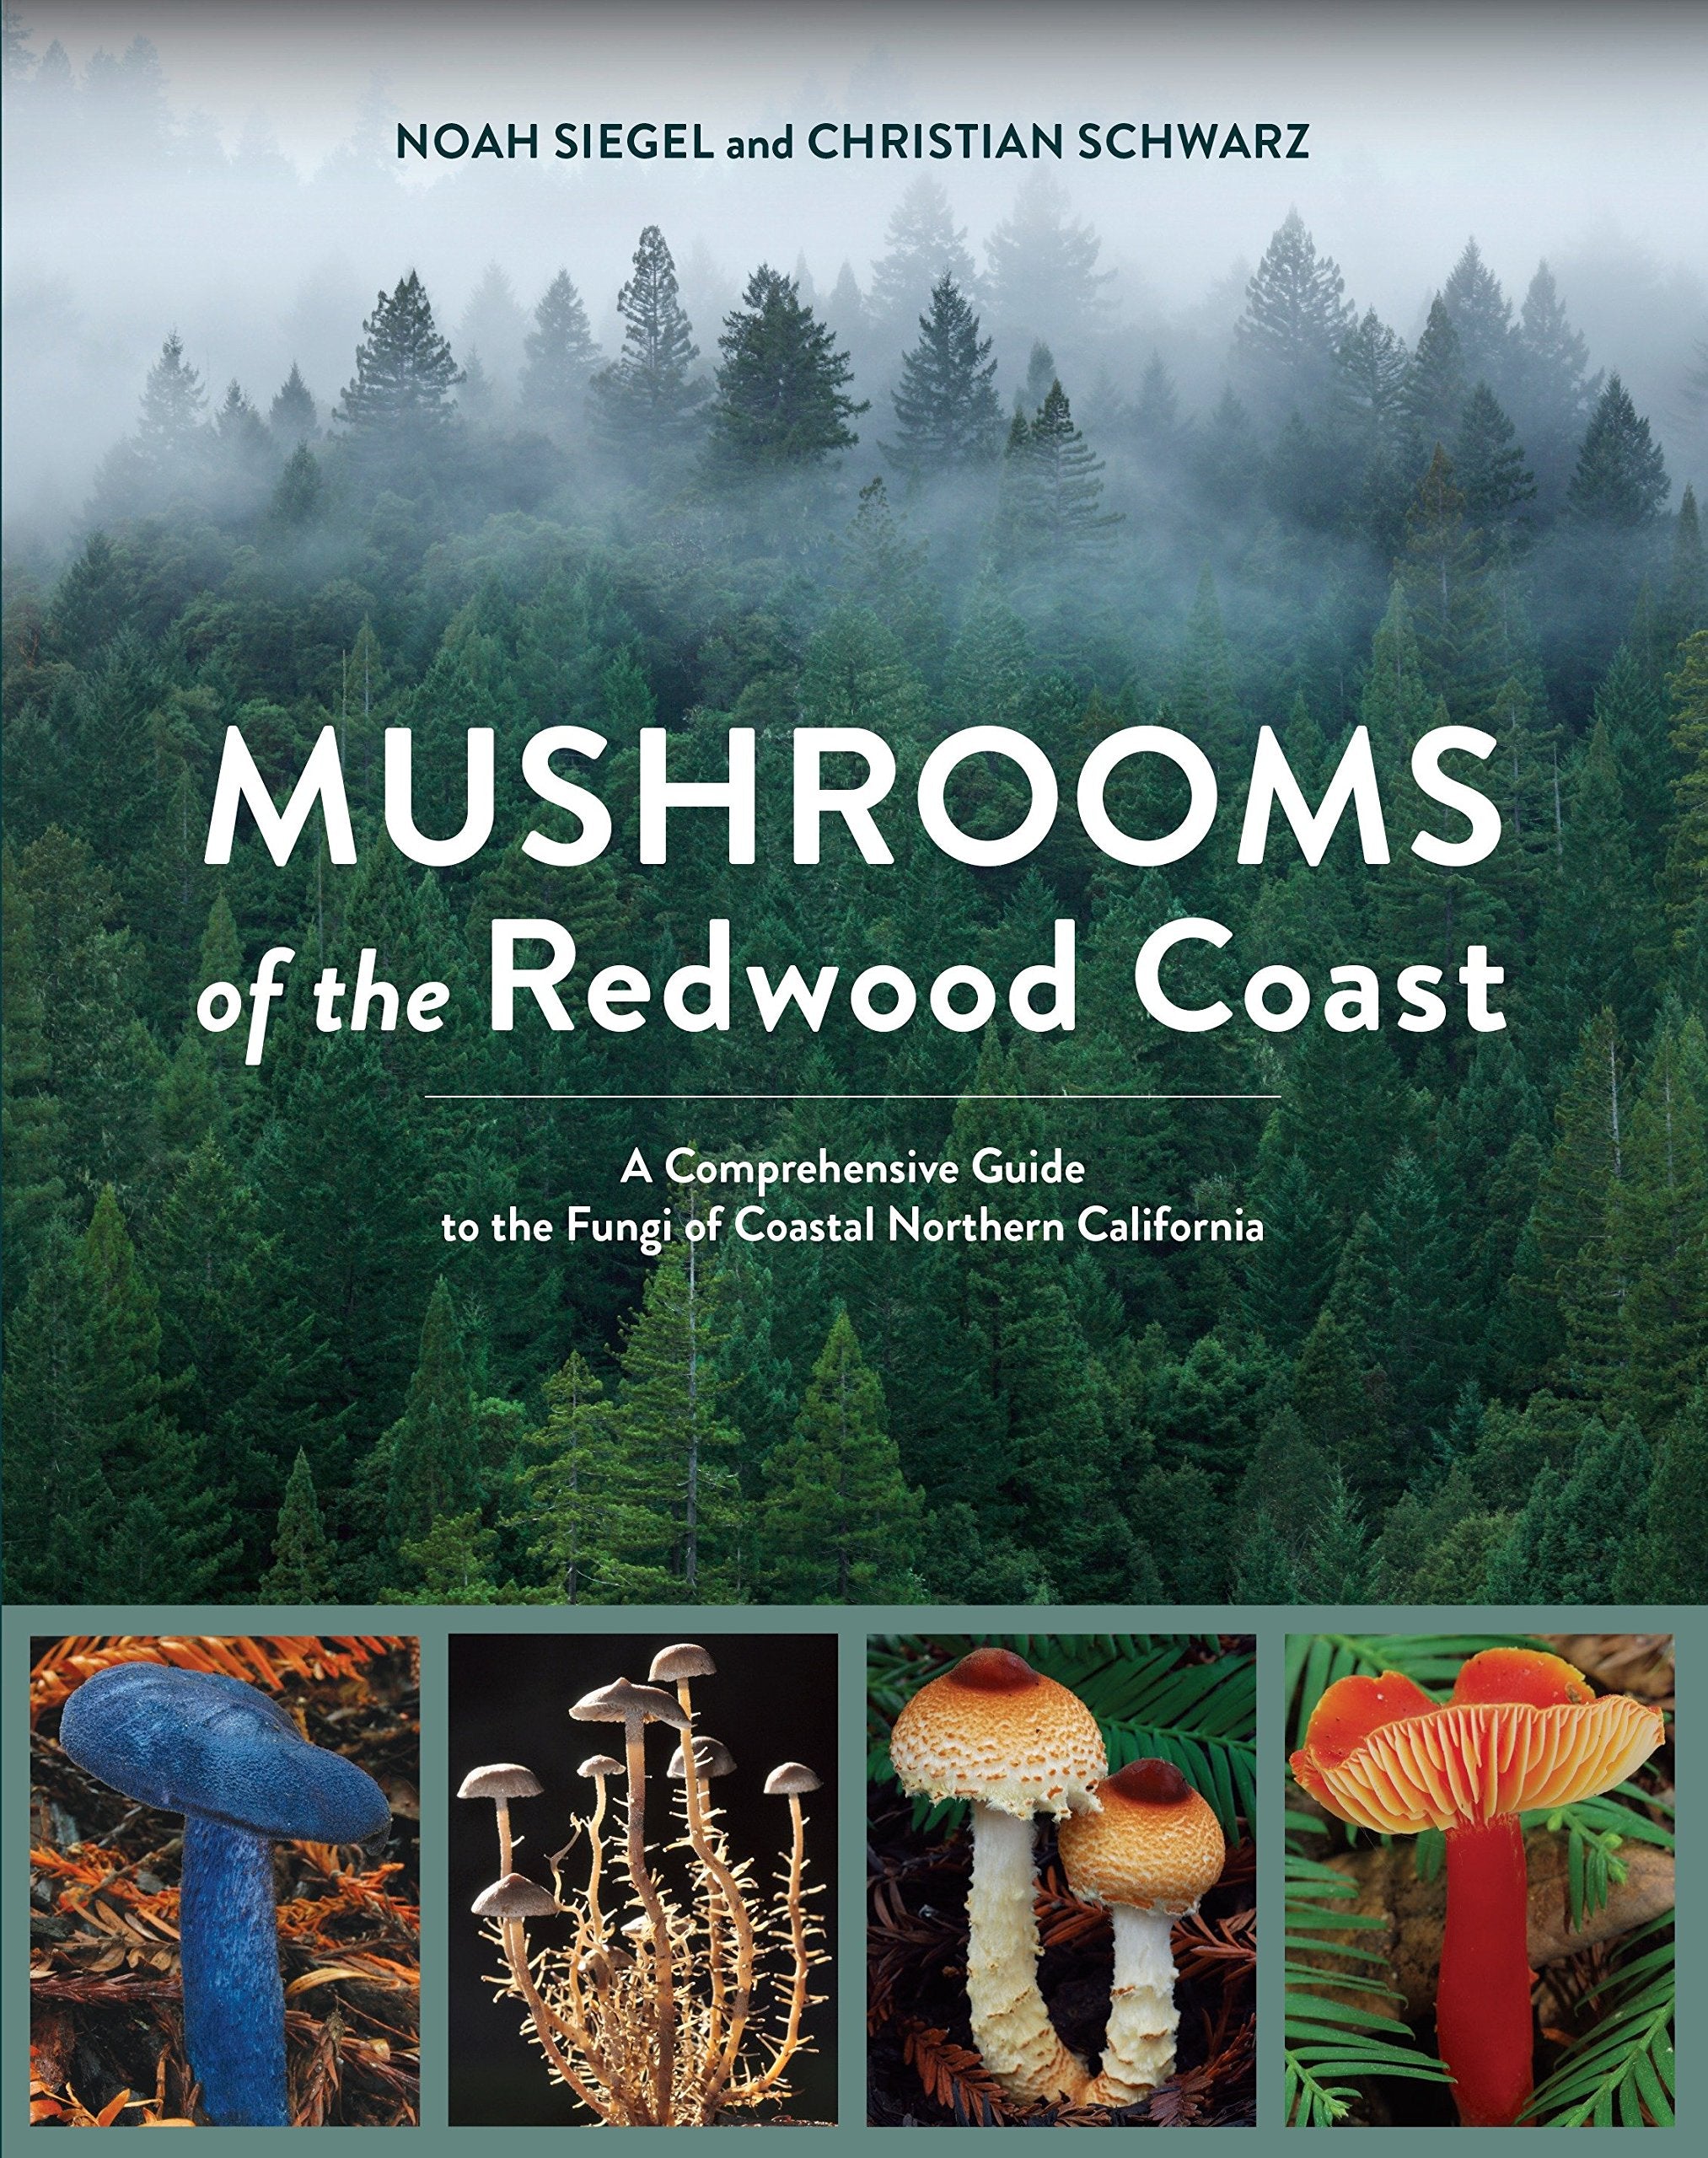 Mushrooms of the Redwood Coast: A Comprehensive Guide to the Fungi of Coastal Northern California (Noah Siegel, Christian Schwarz)